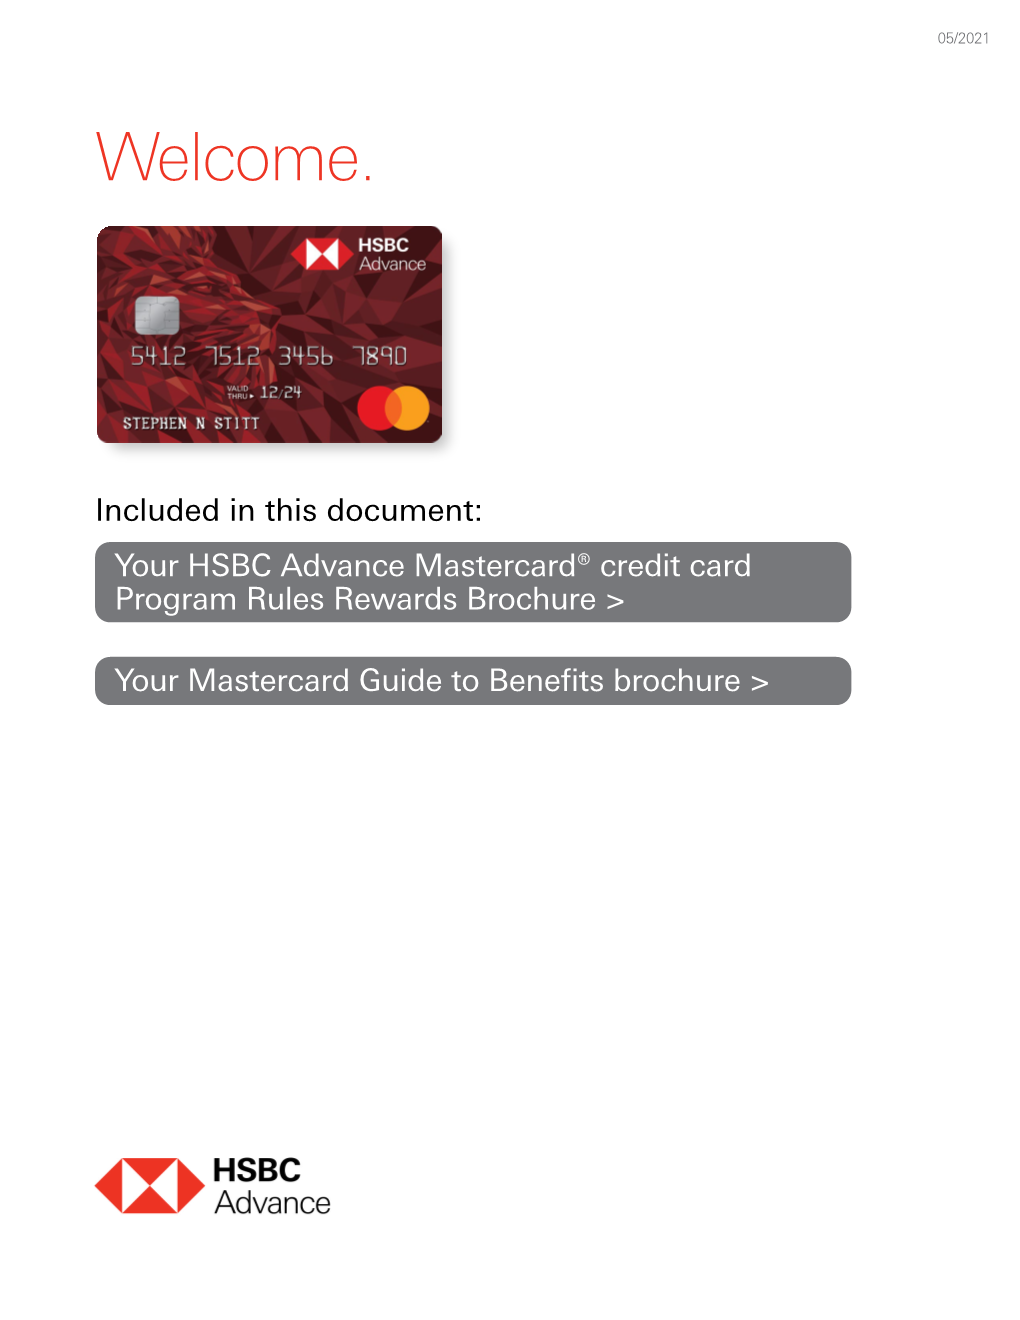 HSBC Advance Mastercard® Credit Card Program Rules Rewards Brochure >